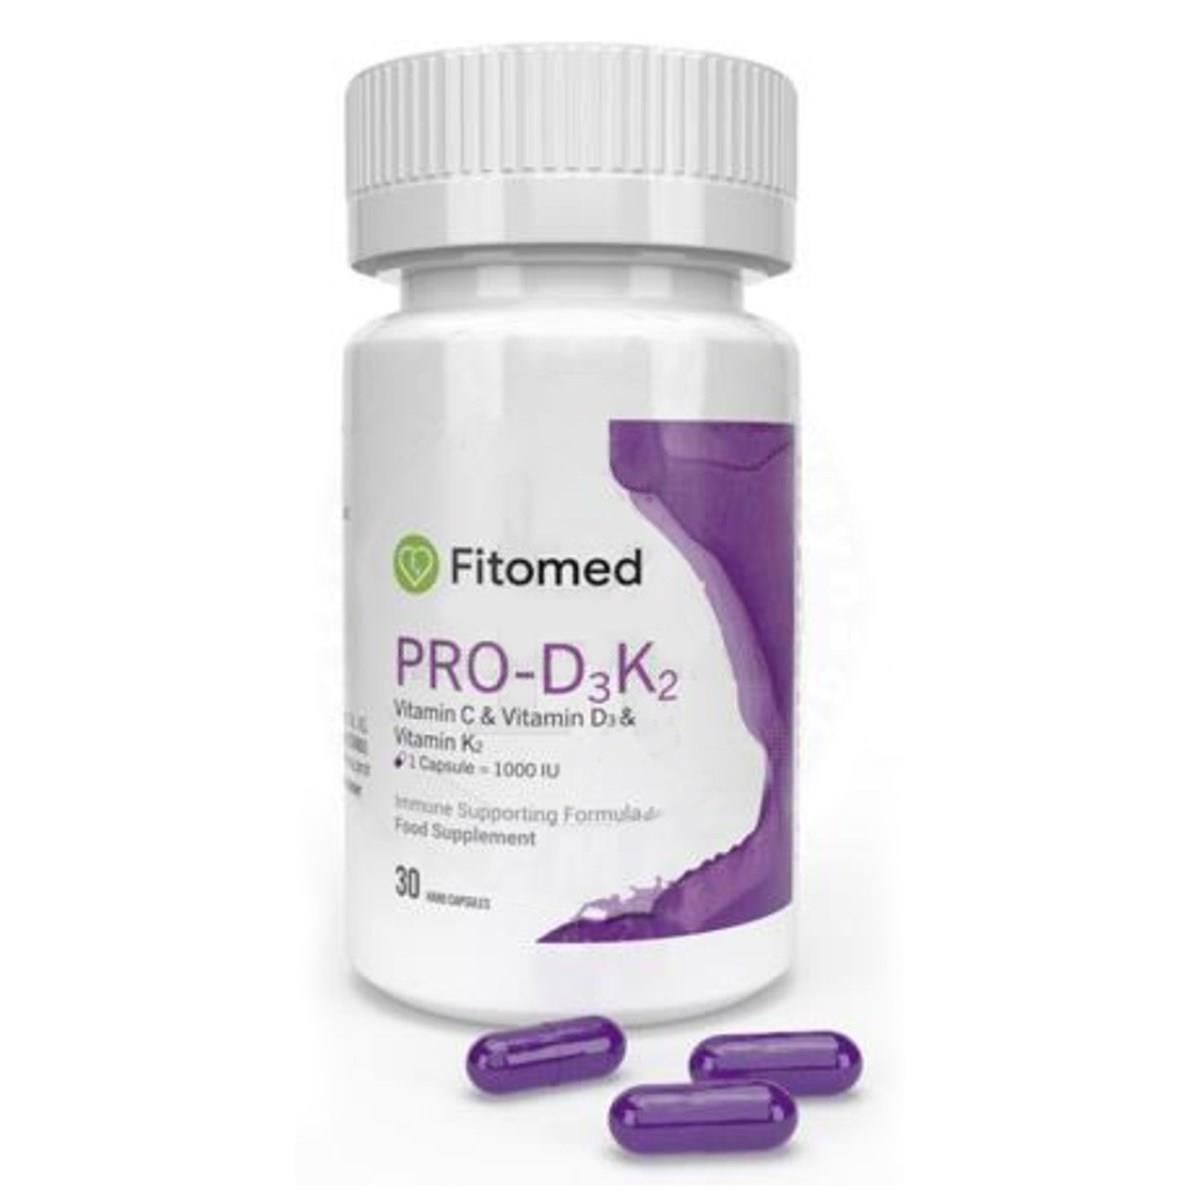 Fitomed Pro-D3K2 Vitamin D3 ve ve Vitamin K2 30 Kapsül - 1